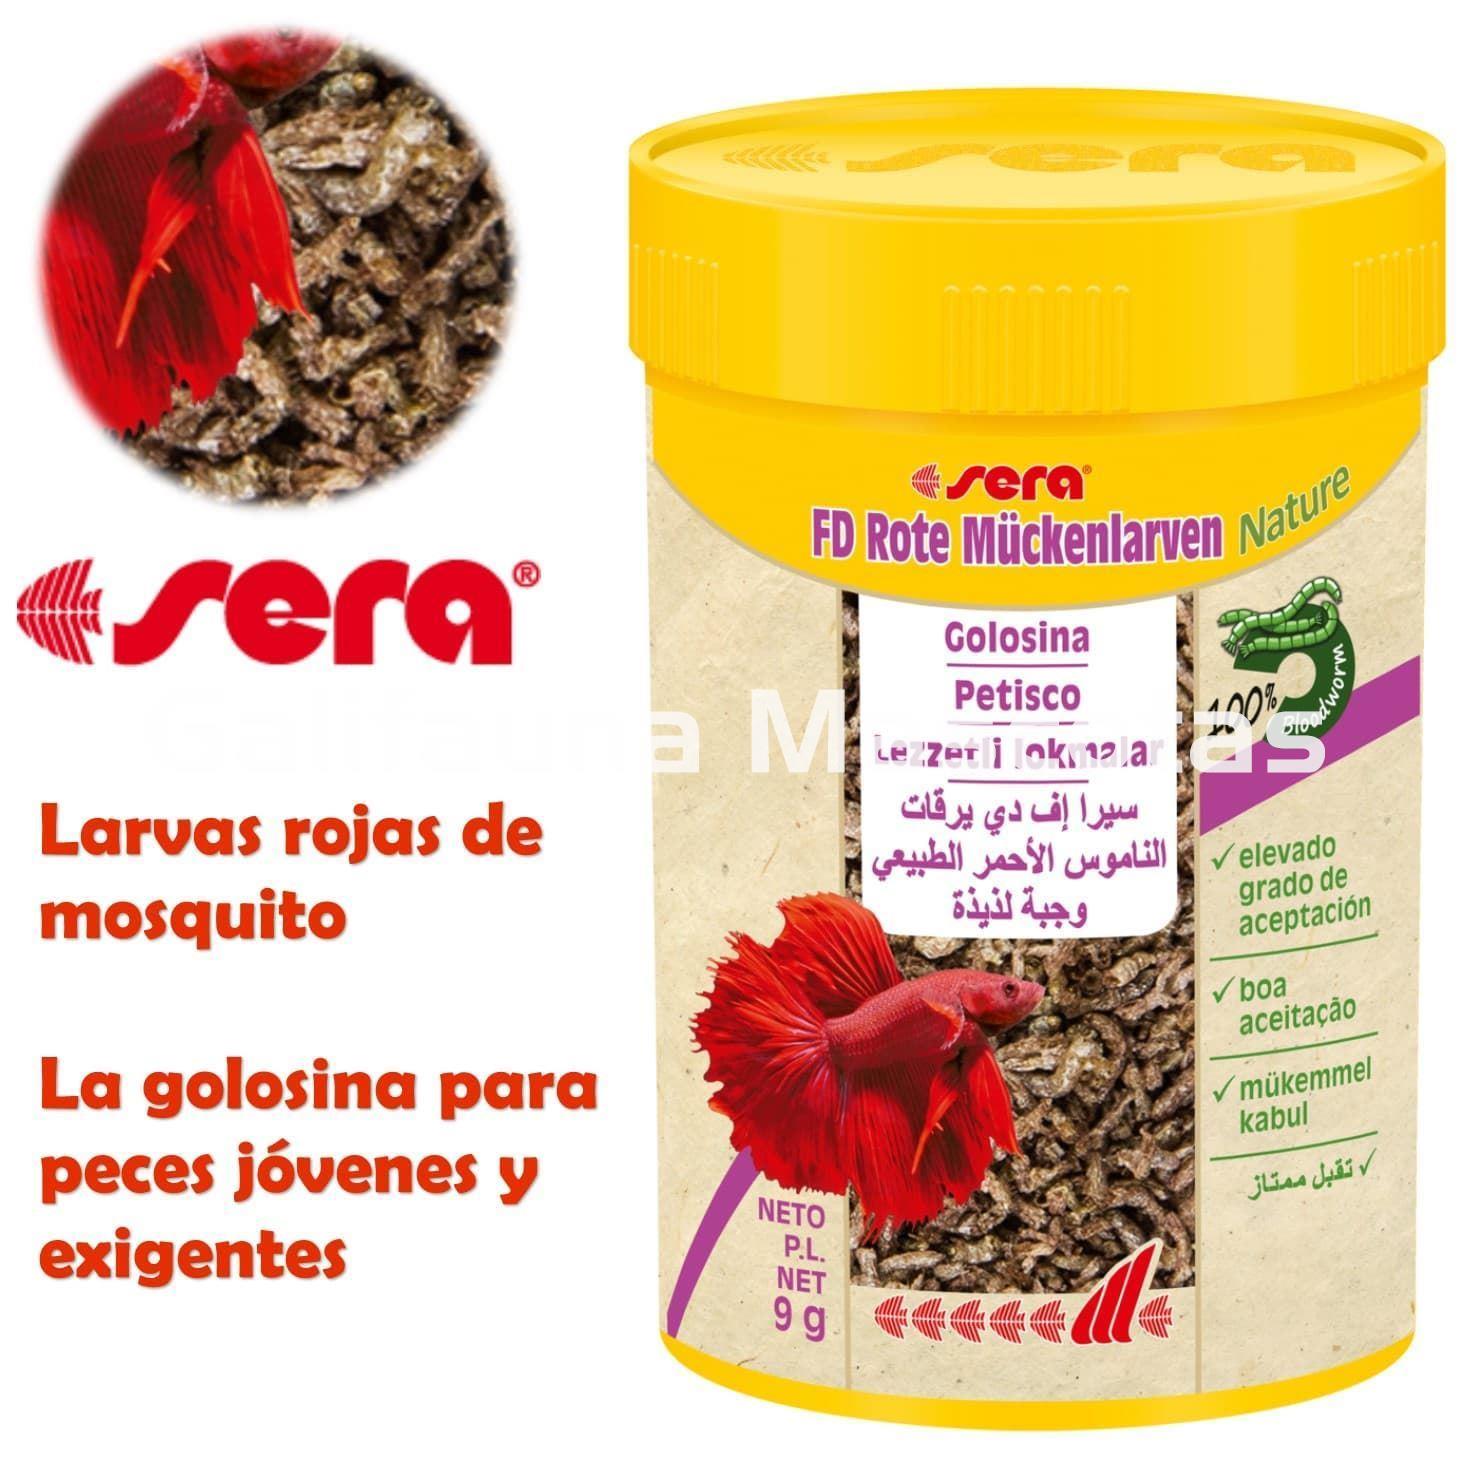 SERA Larvas rojas de mosquito 100 ml. Complemento alimenticio. - Imagen 1